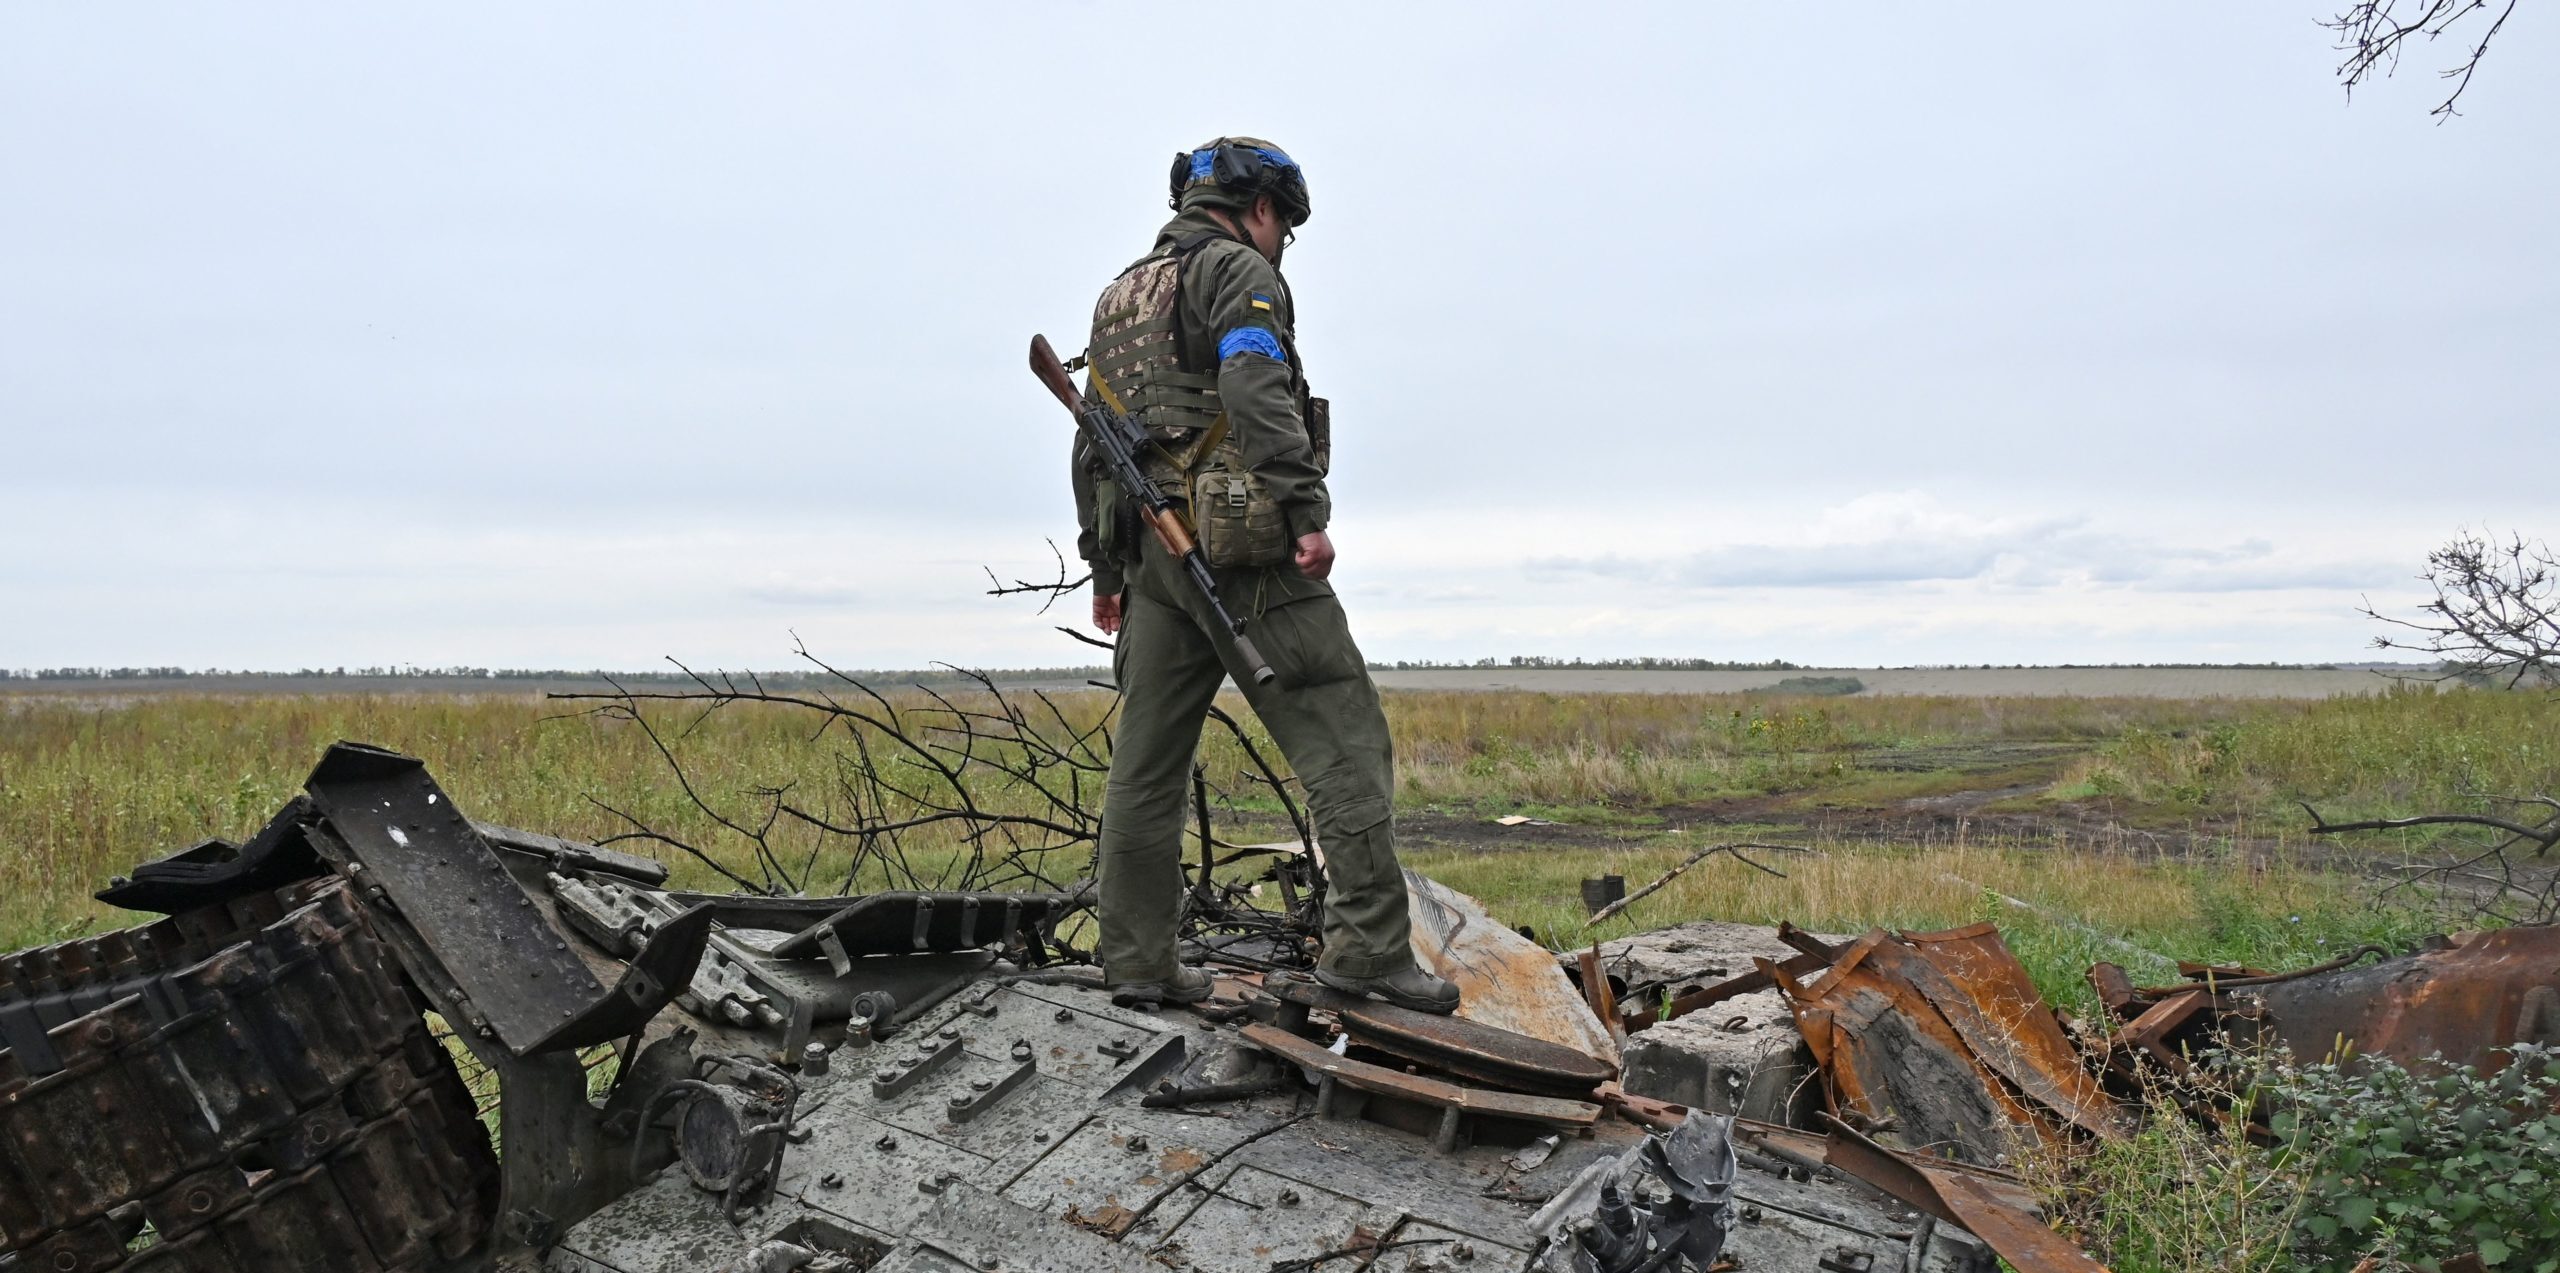 Stop Enabling Bloodshed in Ukraine